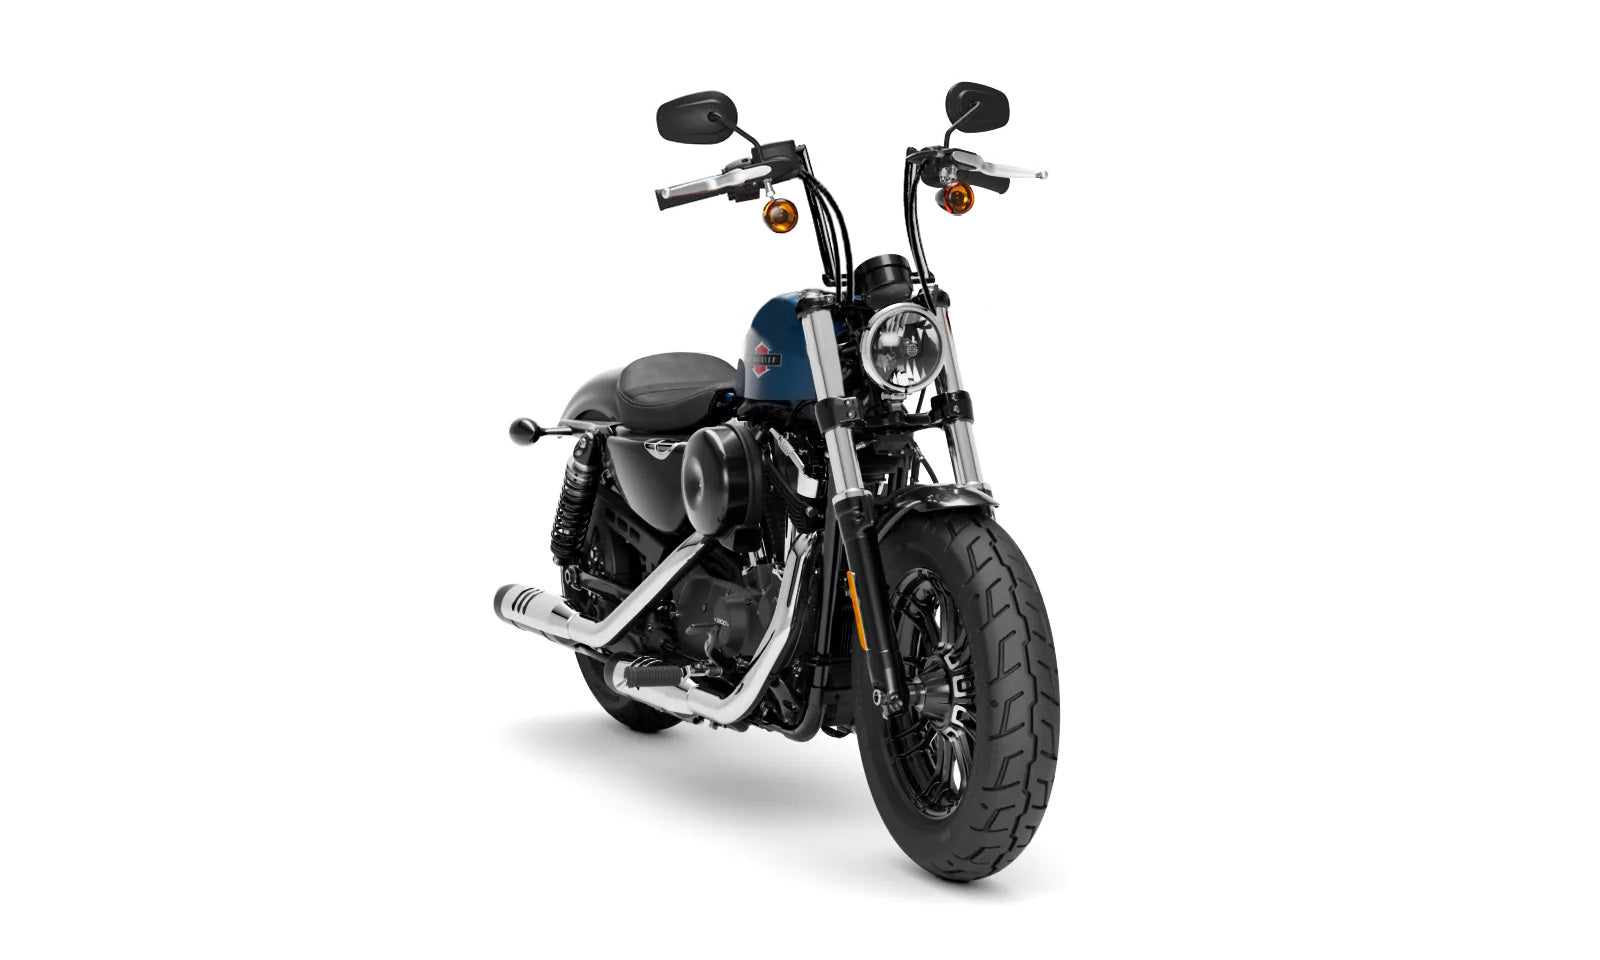 Viking Iron Born 9" Handlebar For Harley Sportster Forty Eight Gloss Black Bag on Bike View @expand